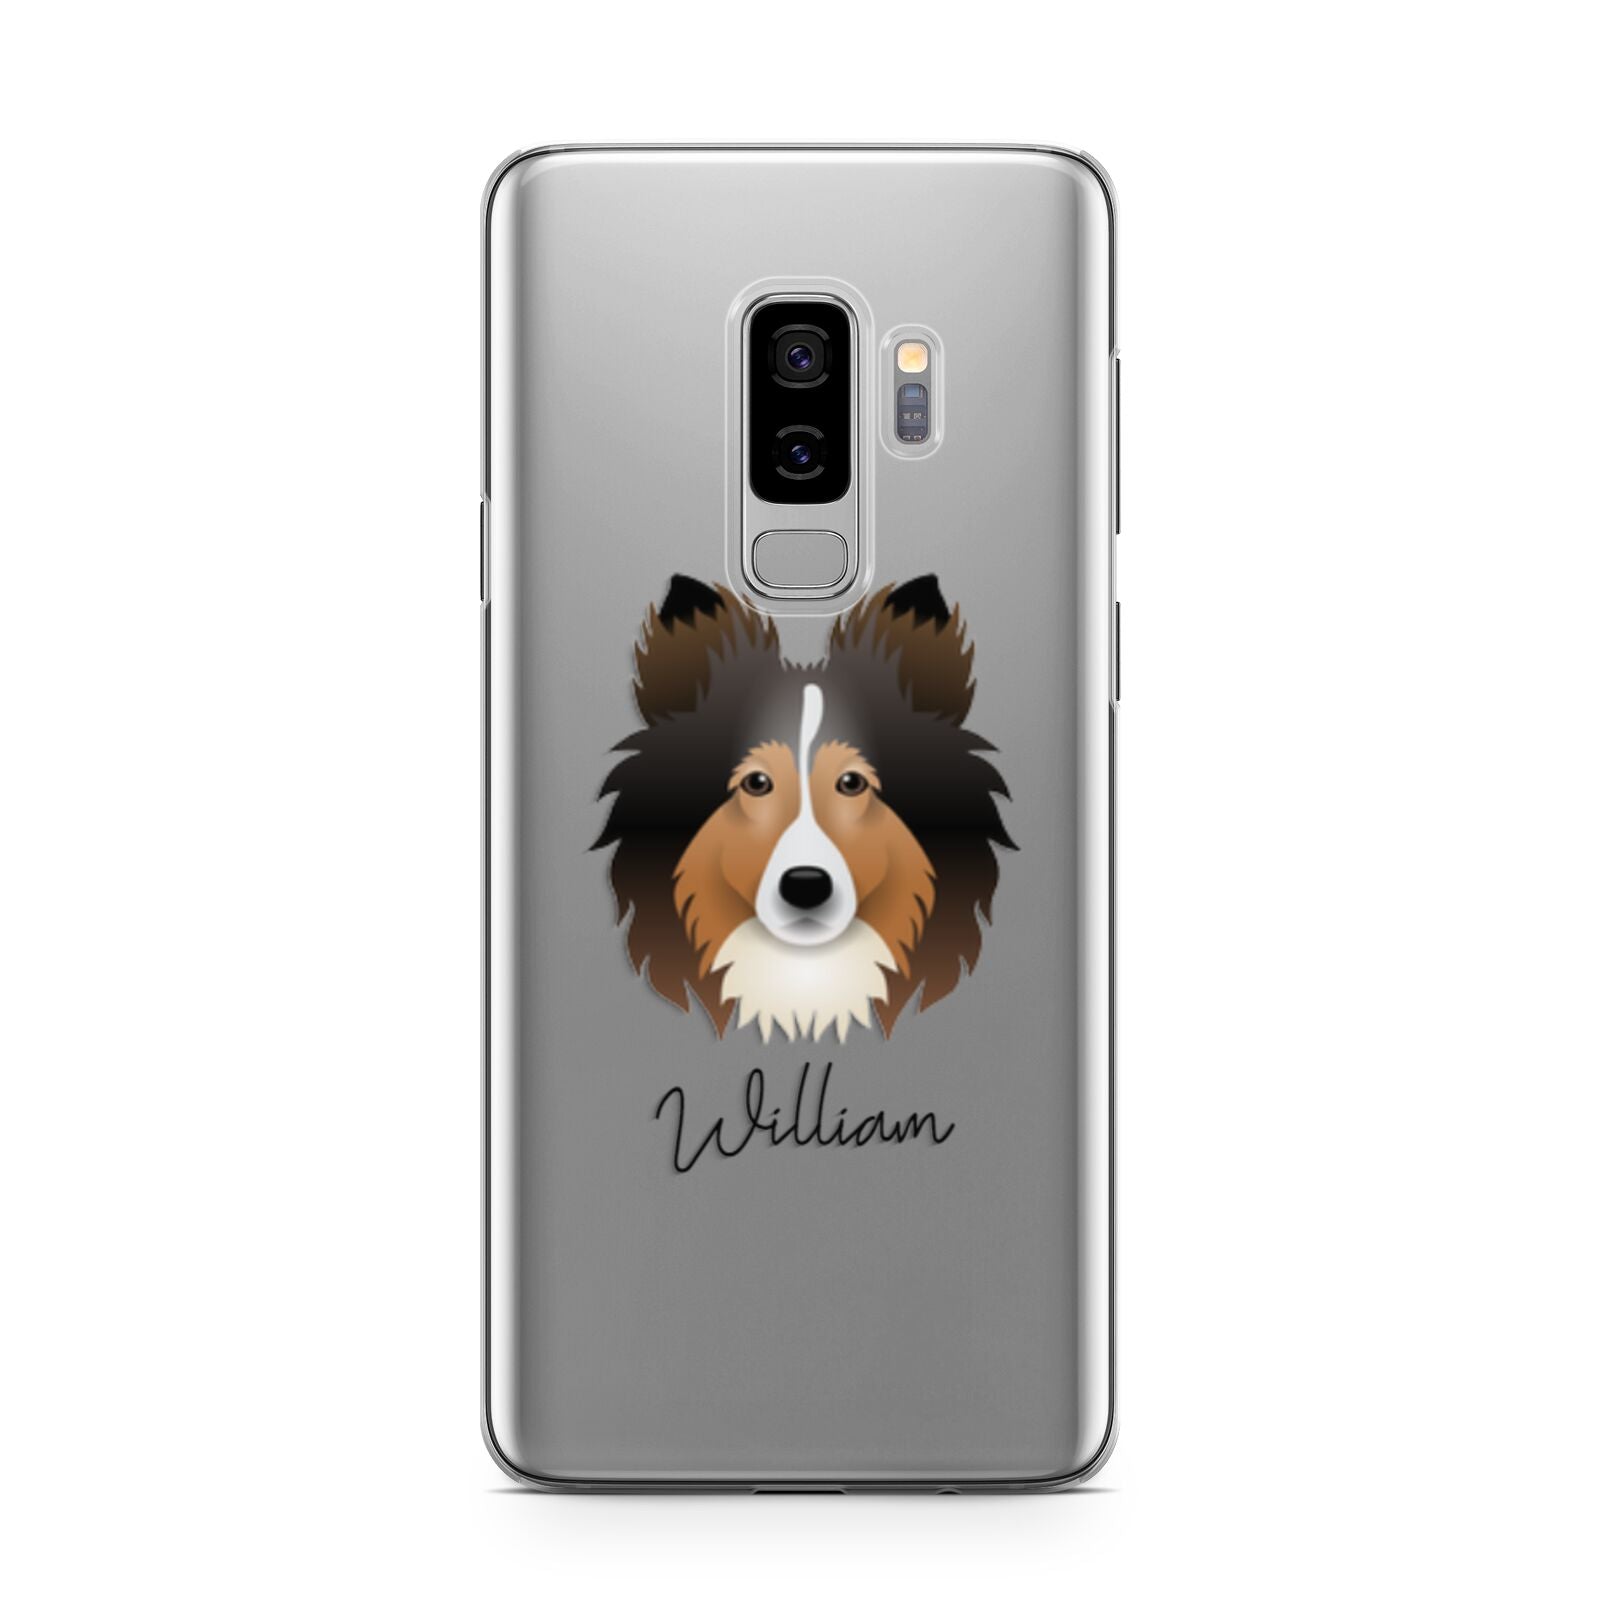 Shetland Sheepdog Personalised Samsung Galaxy S9 Plus Case on Silver phone